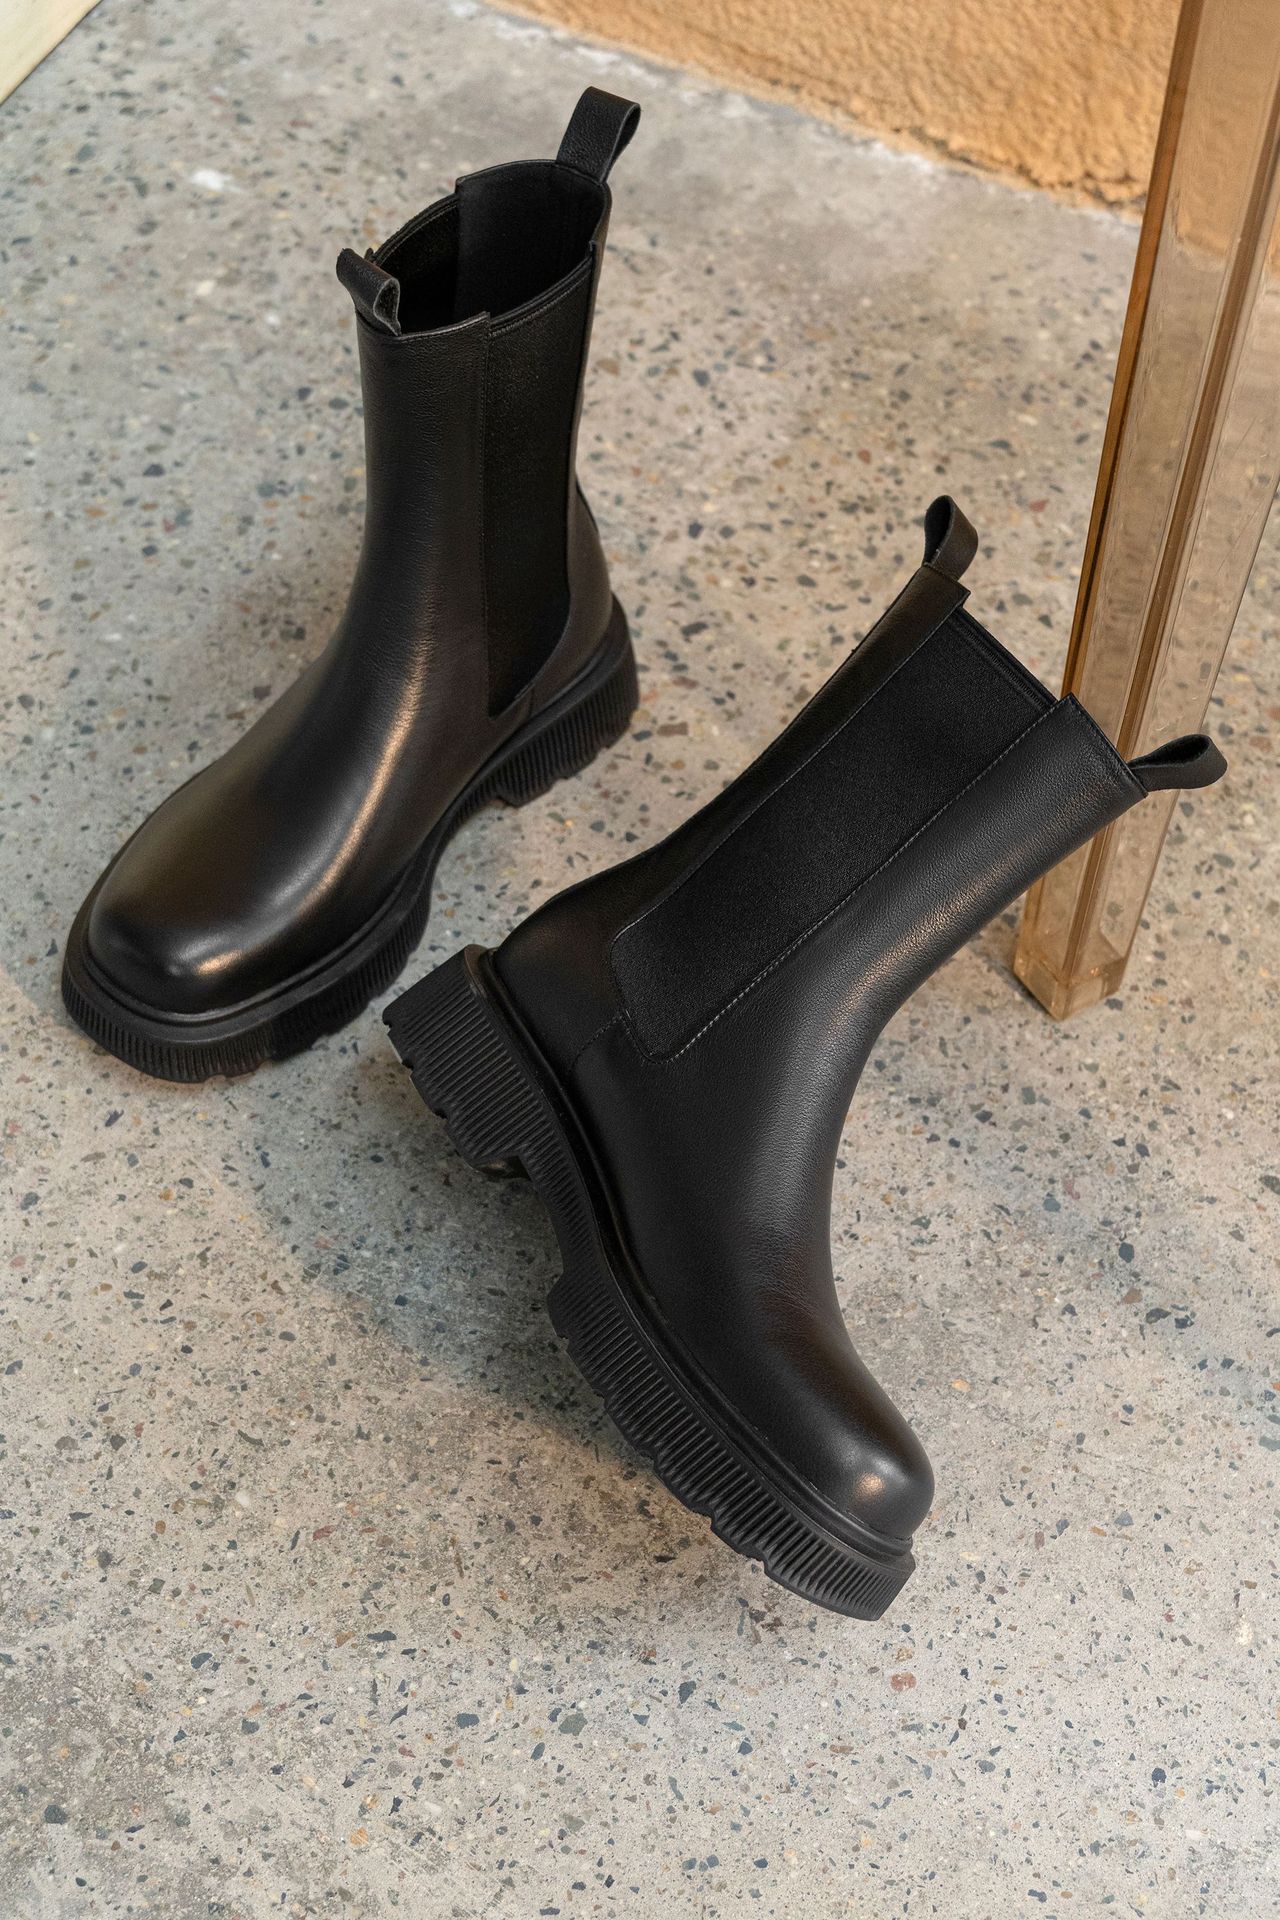 Chiko Concesa Round Toe Block Heels Boots